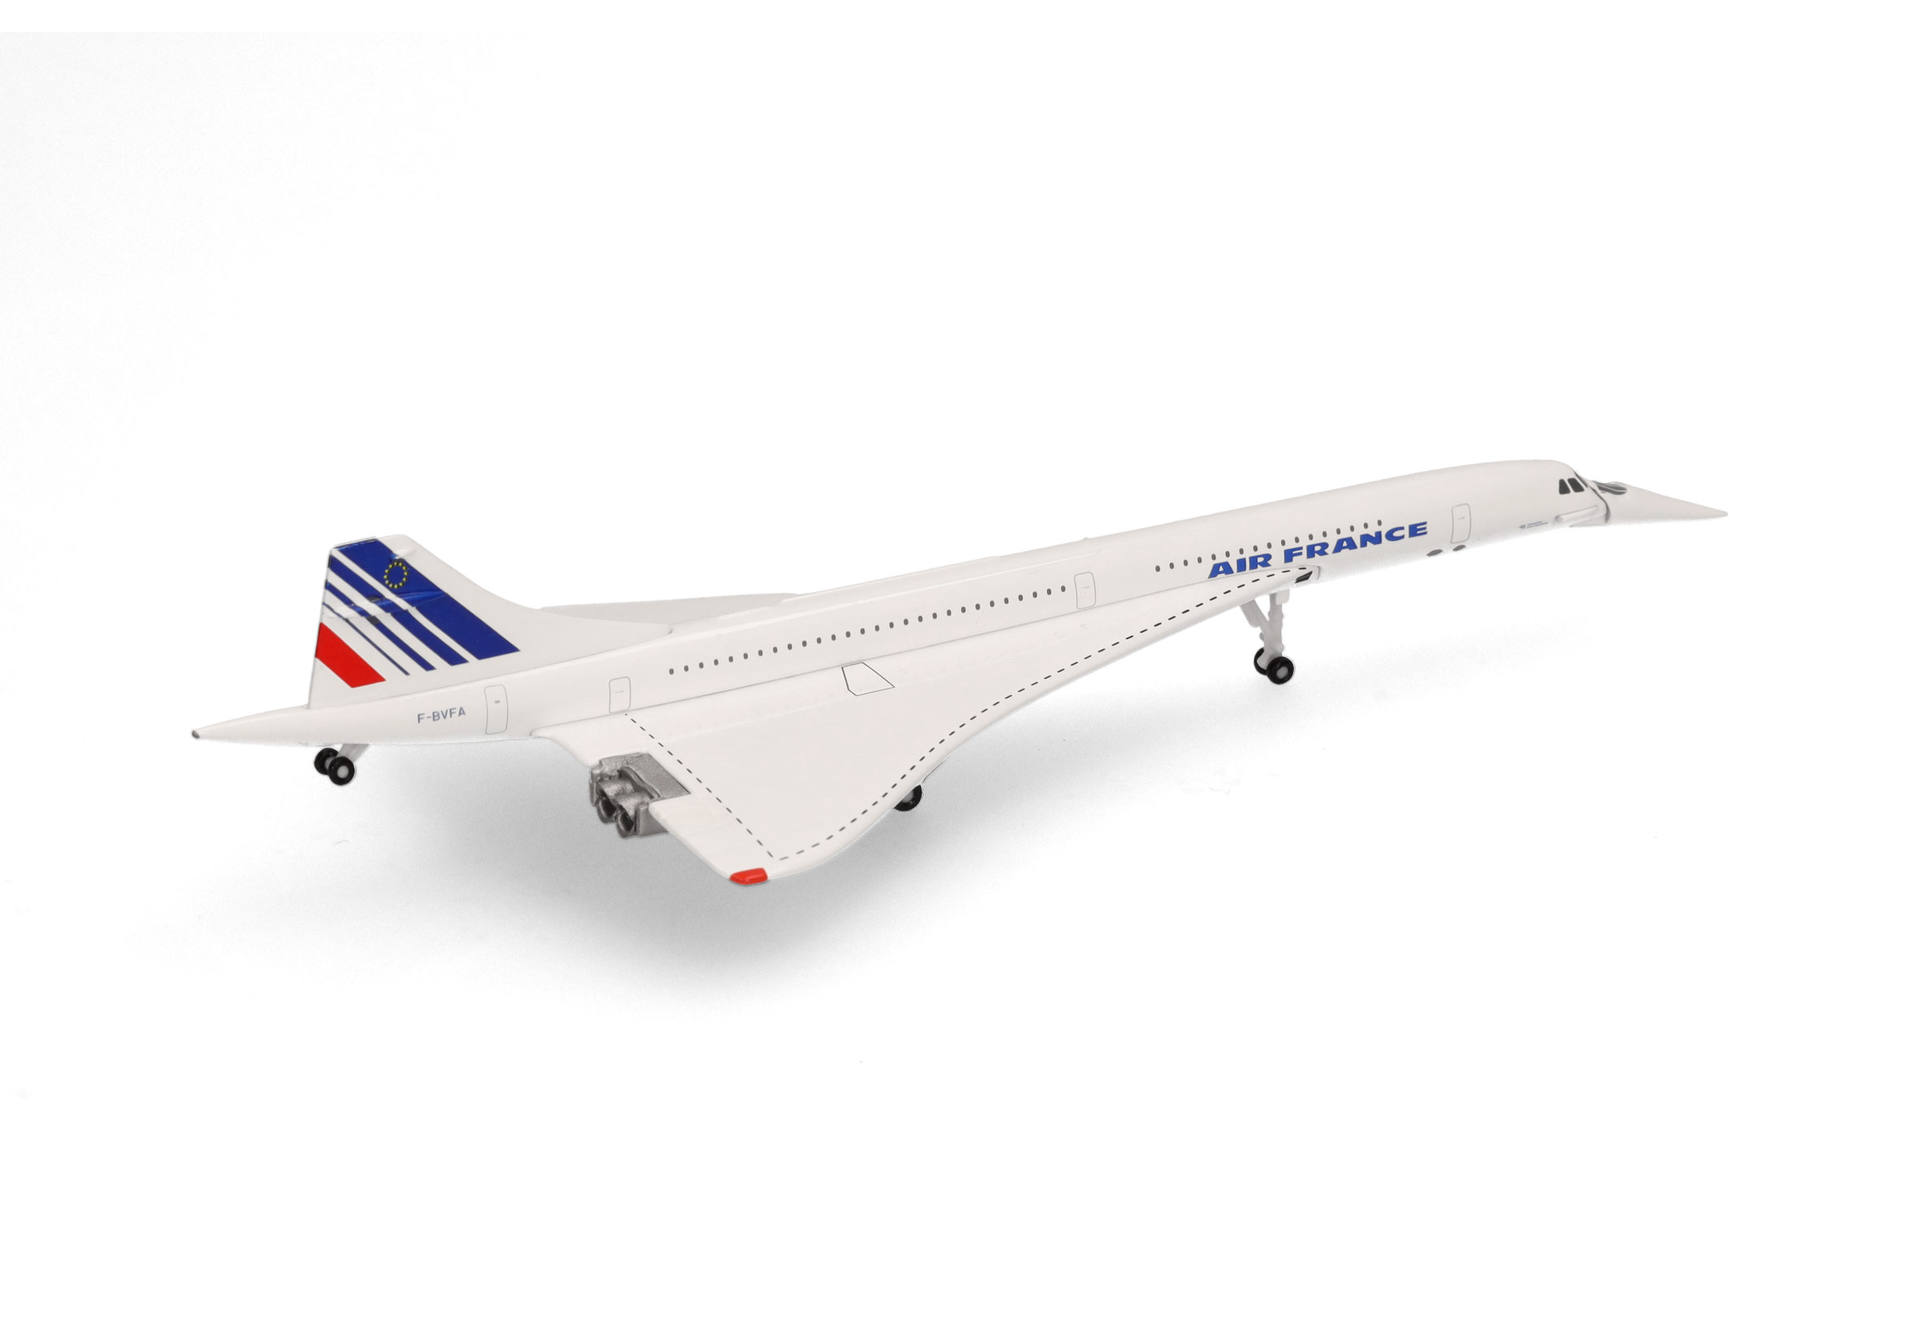 Air France Concorde "Charles Lindbergh"